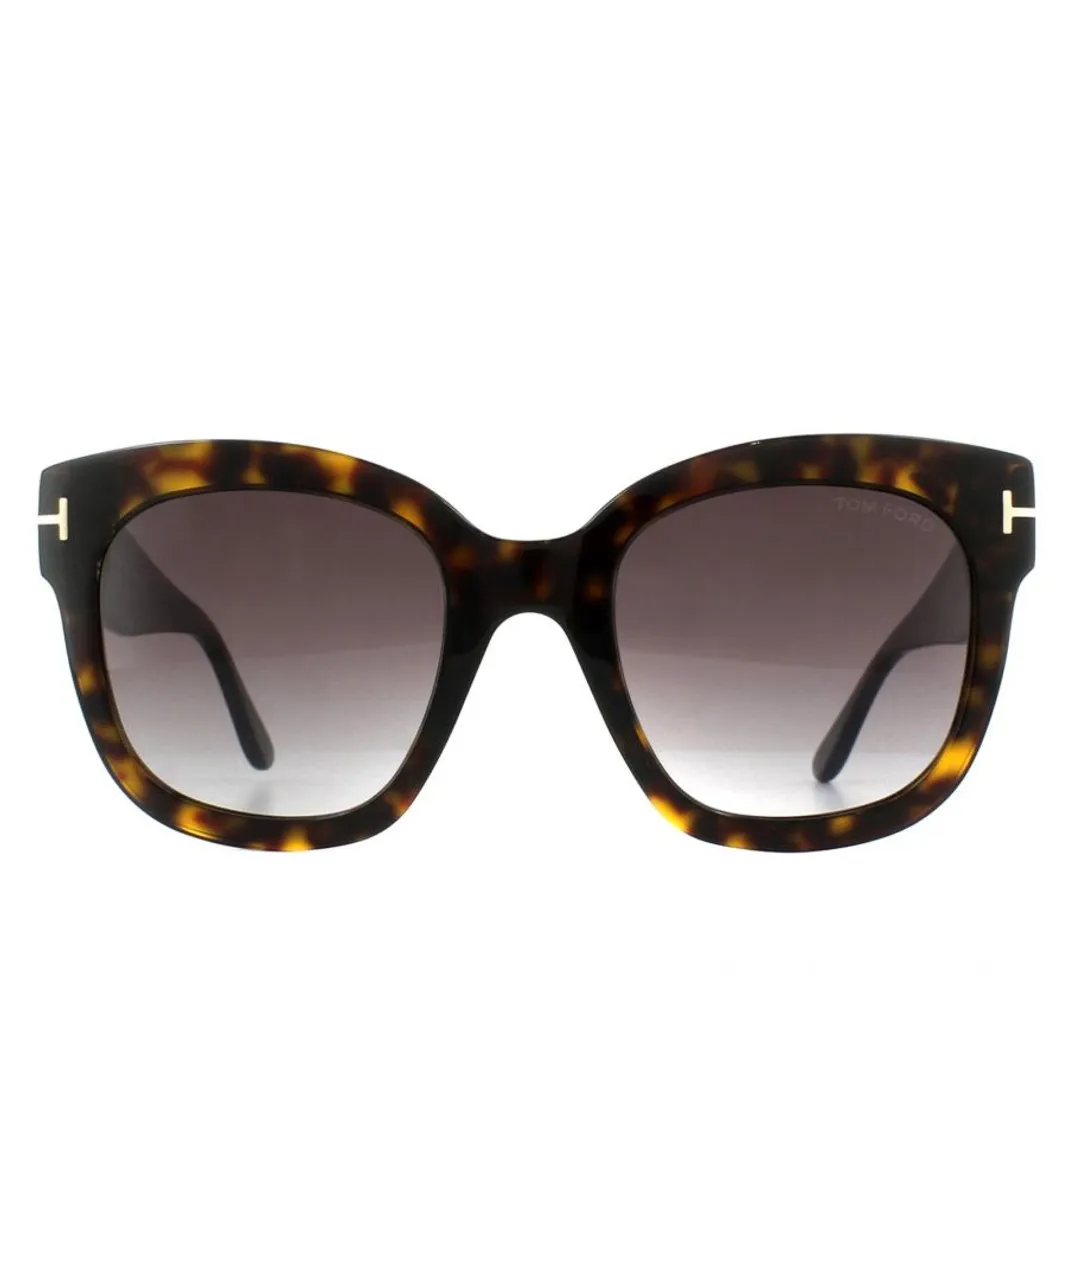 Tom Ford Square Womens Dark Havana Bordeaux Gradient Sunglasses - Brown - One